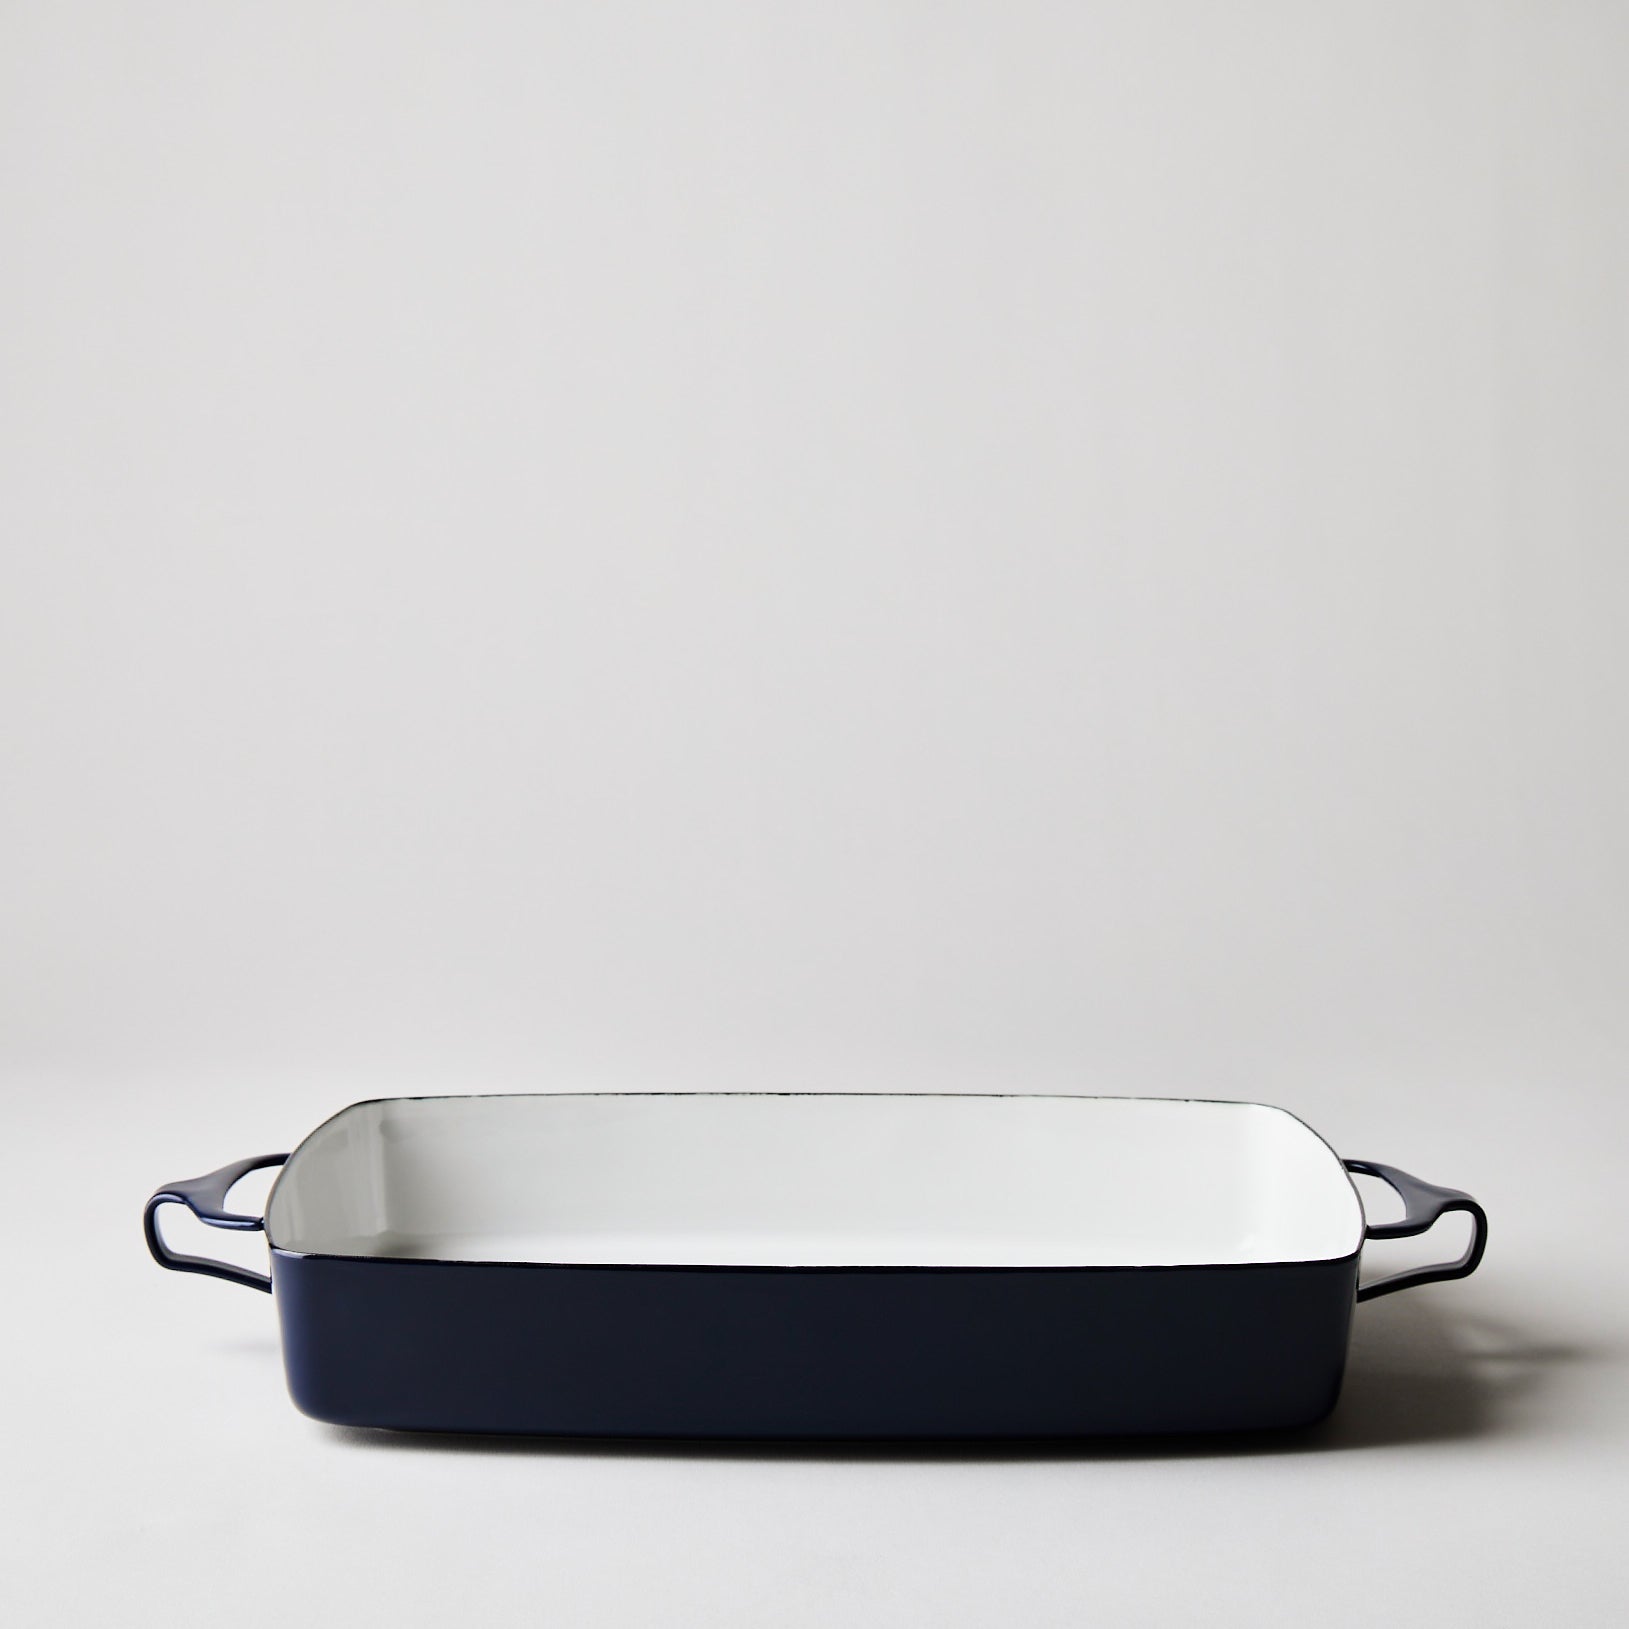  Dansk Kobenstyle White Mini Saucepan, Small,: Home